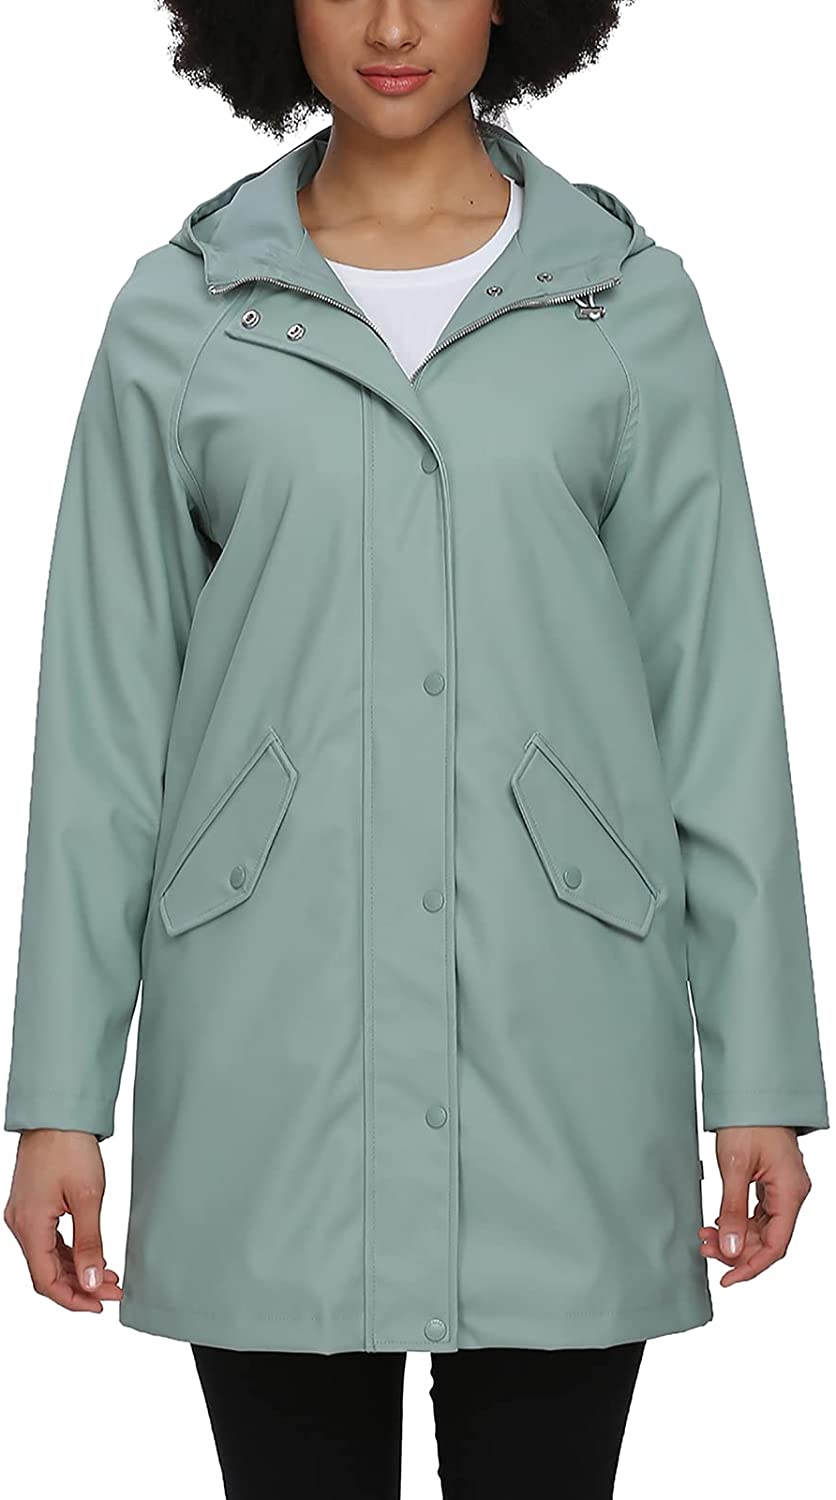 Fahsyee Rain Jacket Waterproof Raincoat Hooded Windbreaker Outdoor Long Active Raincoat Women 